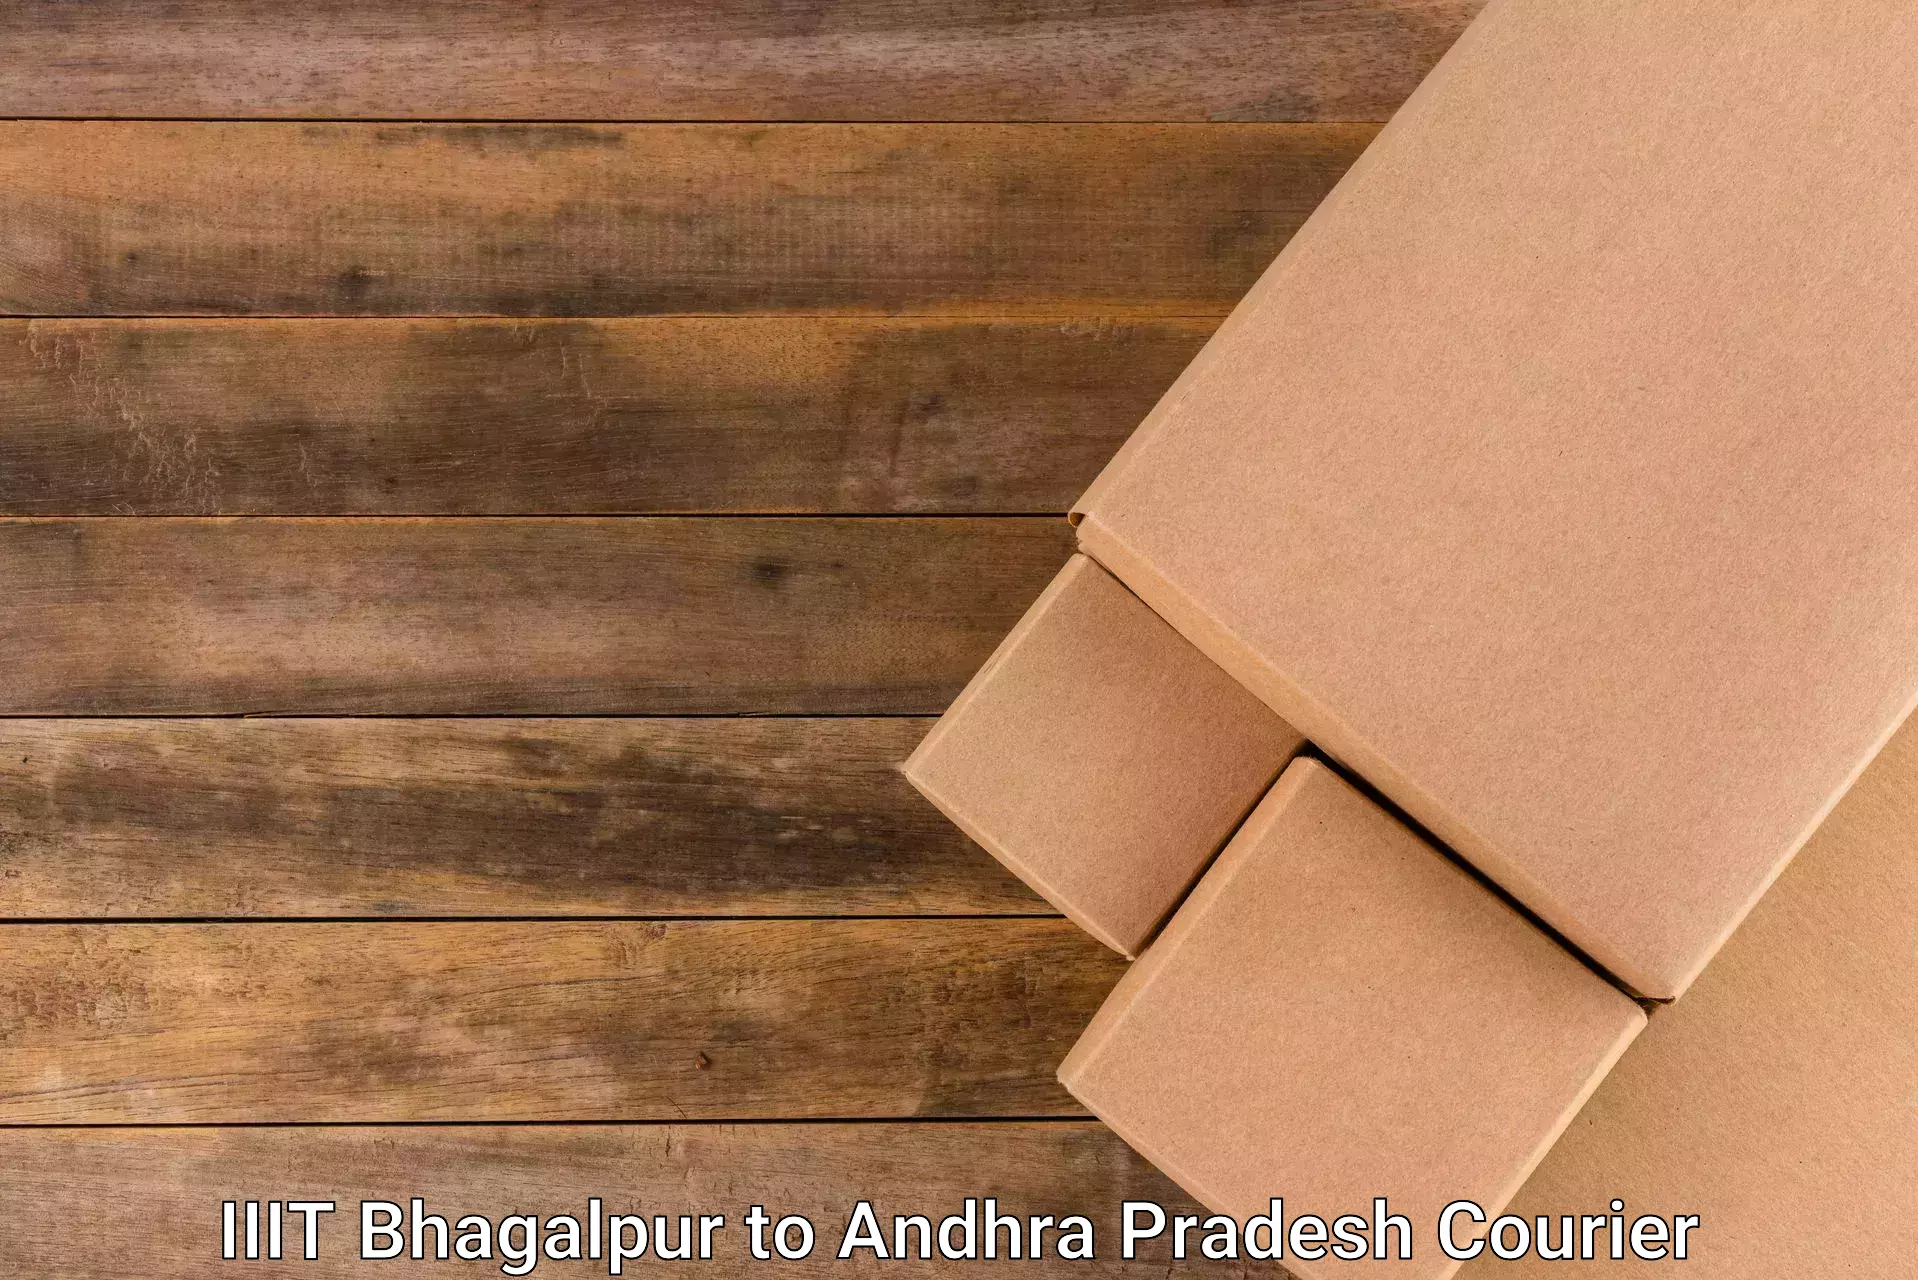 Custom courier packaging IIIT Bhagalpur to IIT Tirupati